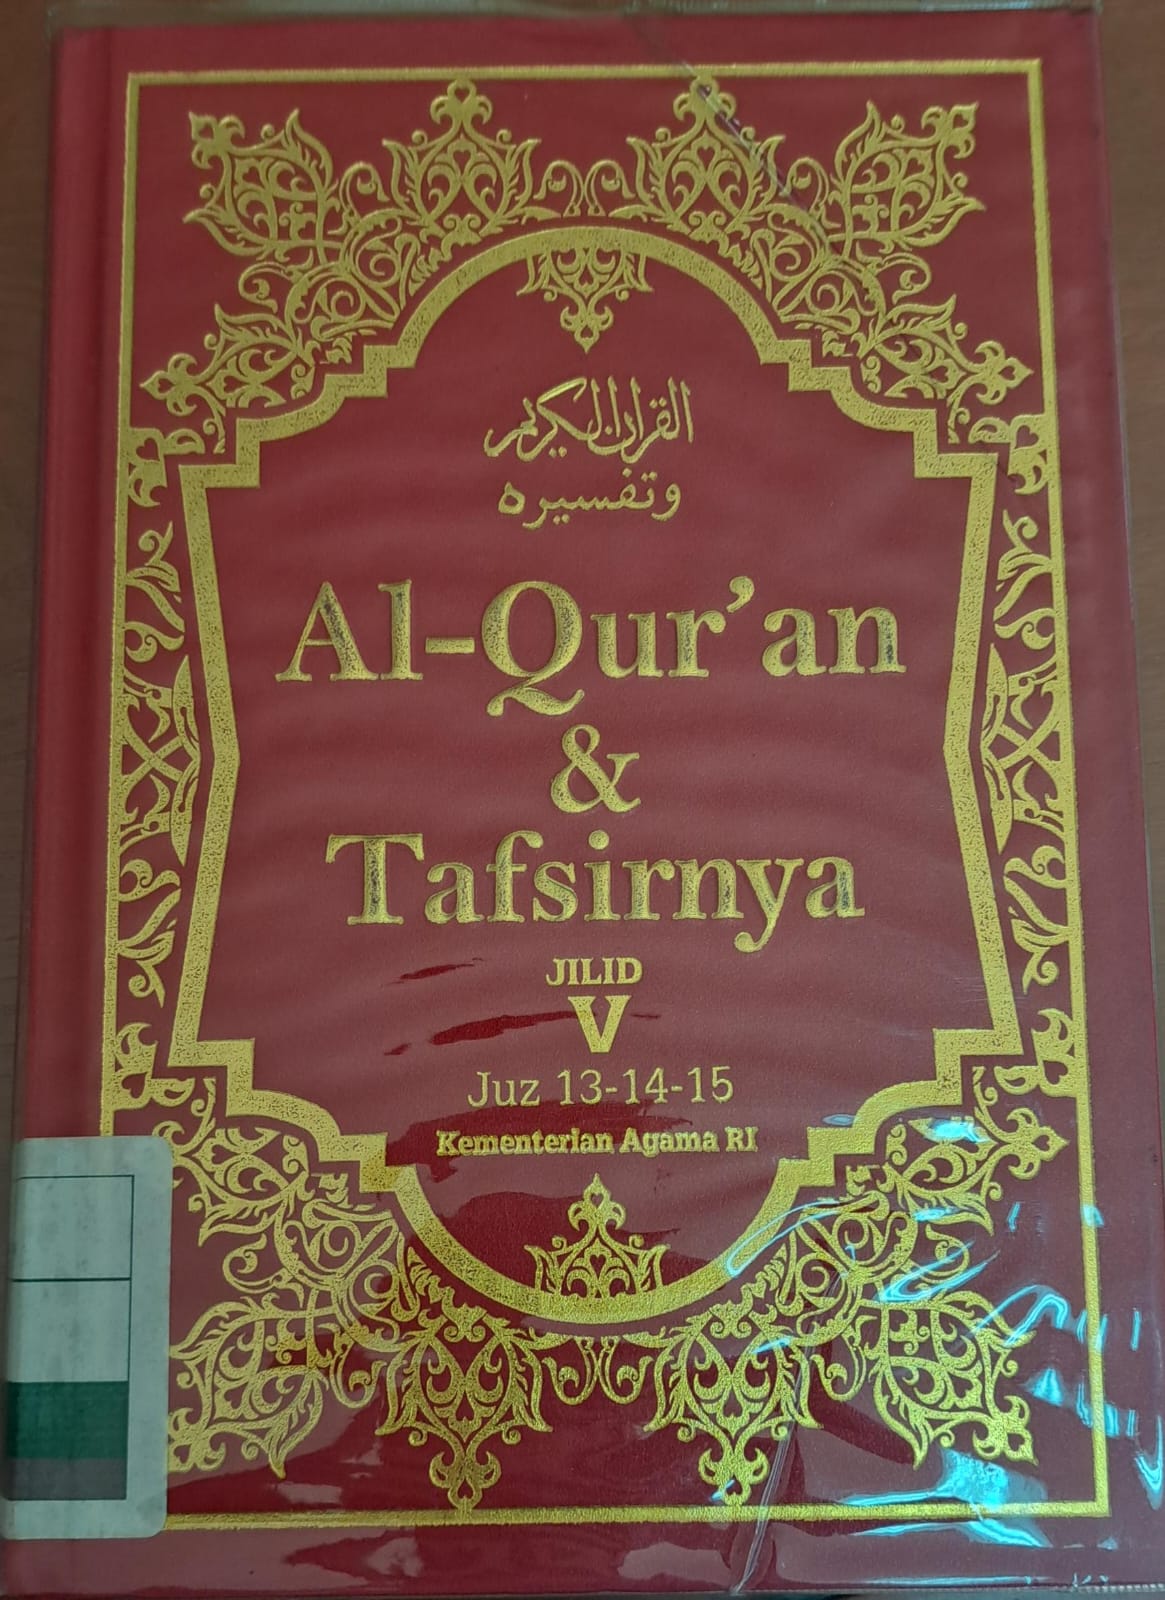 Al-qur'an & tafsirnya jilid V :  Juz 13-14-15